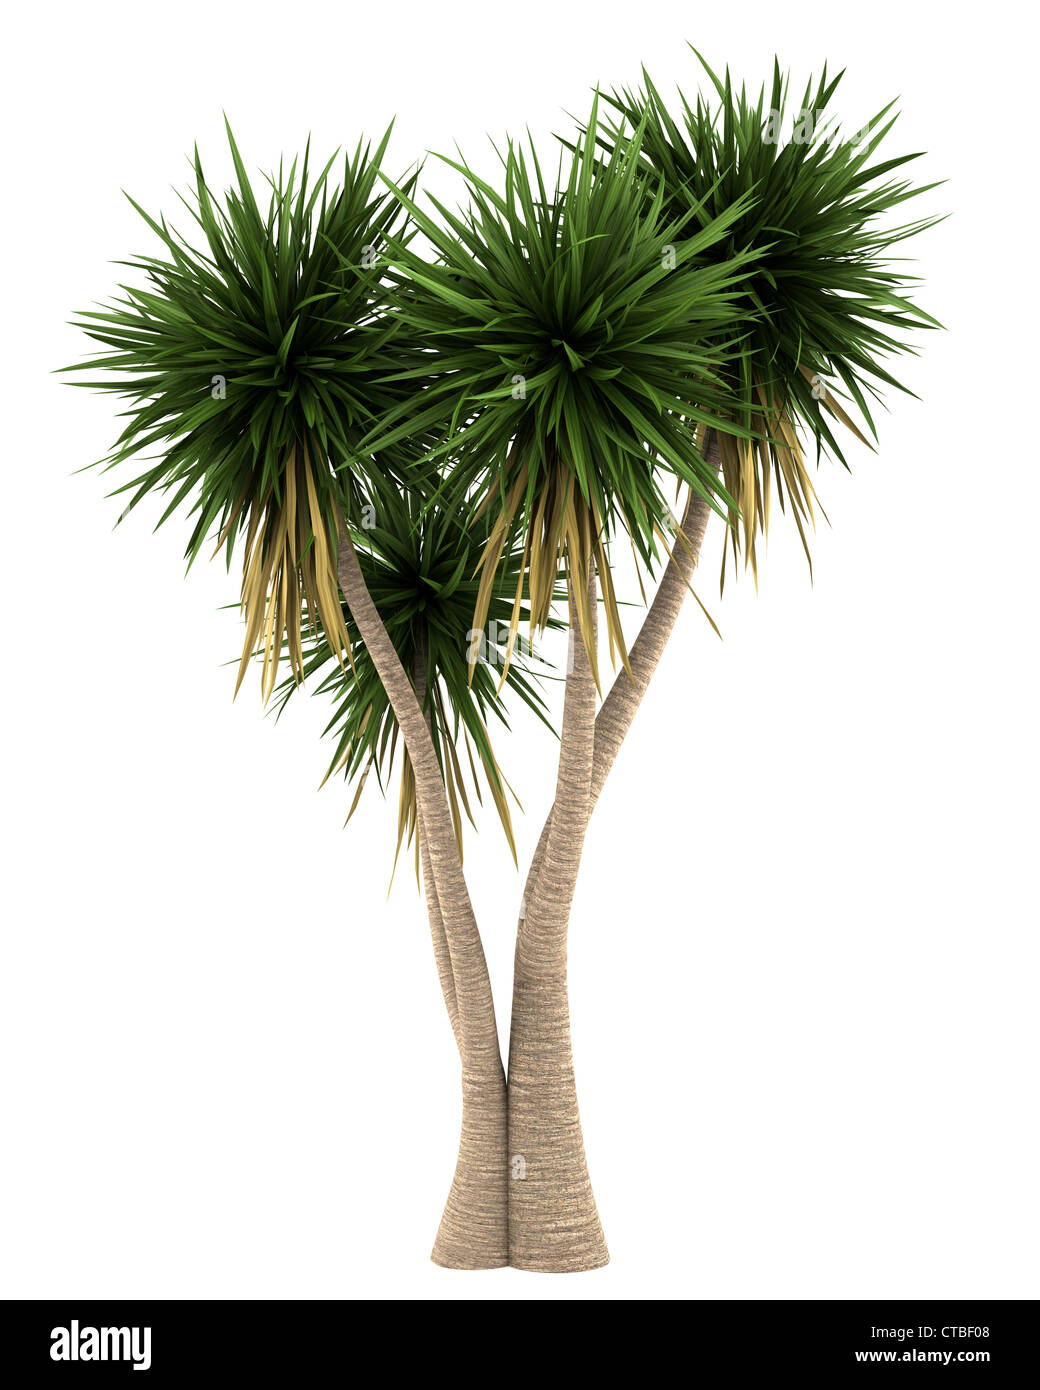 Yucca palm tree isolated on white background Stock Photo